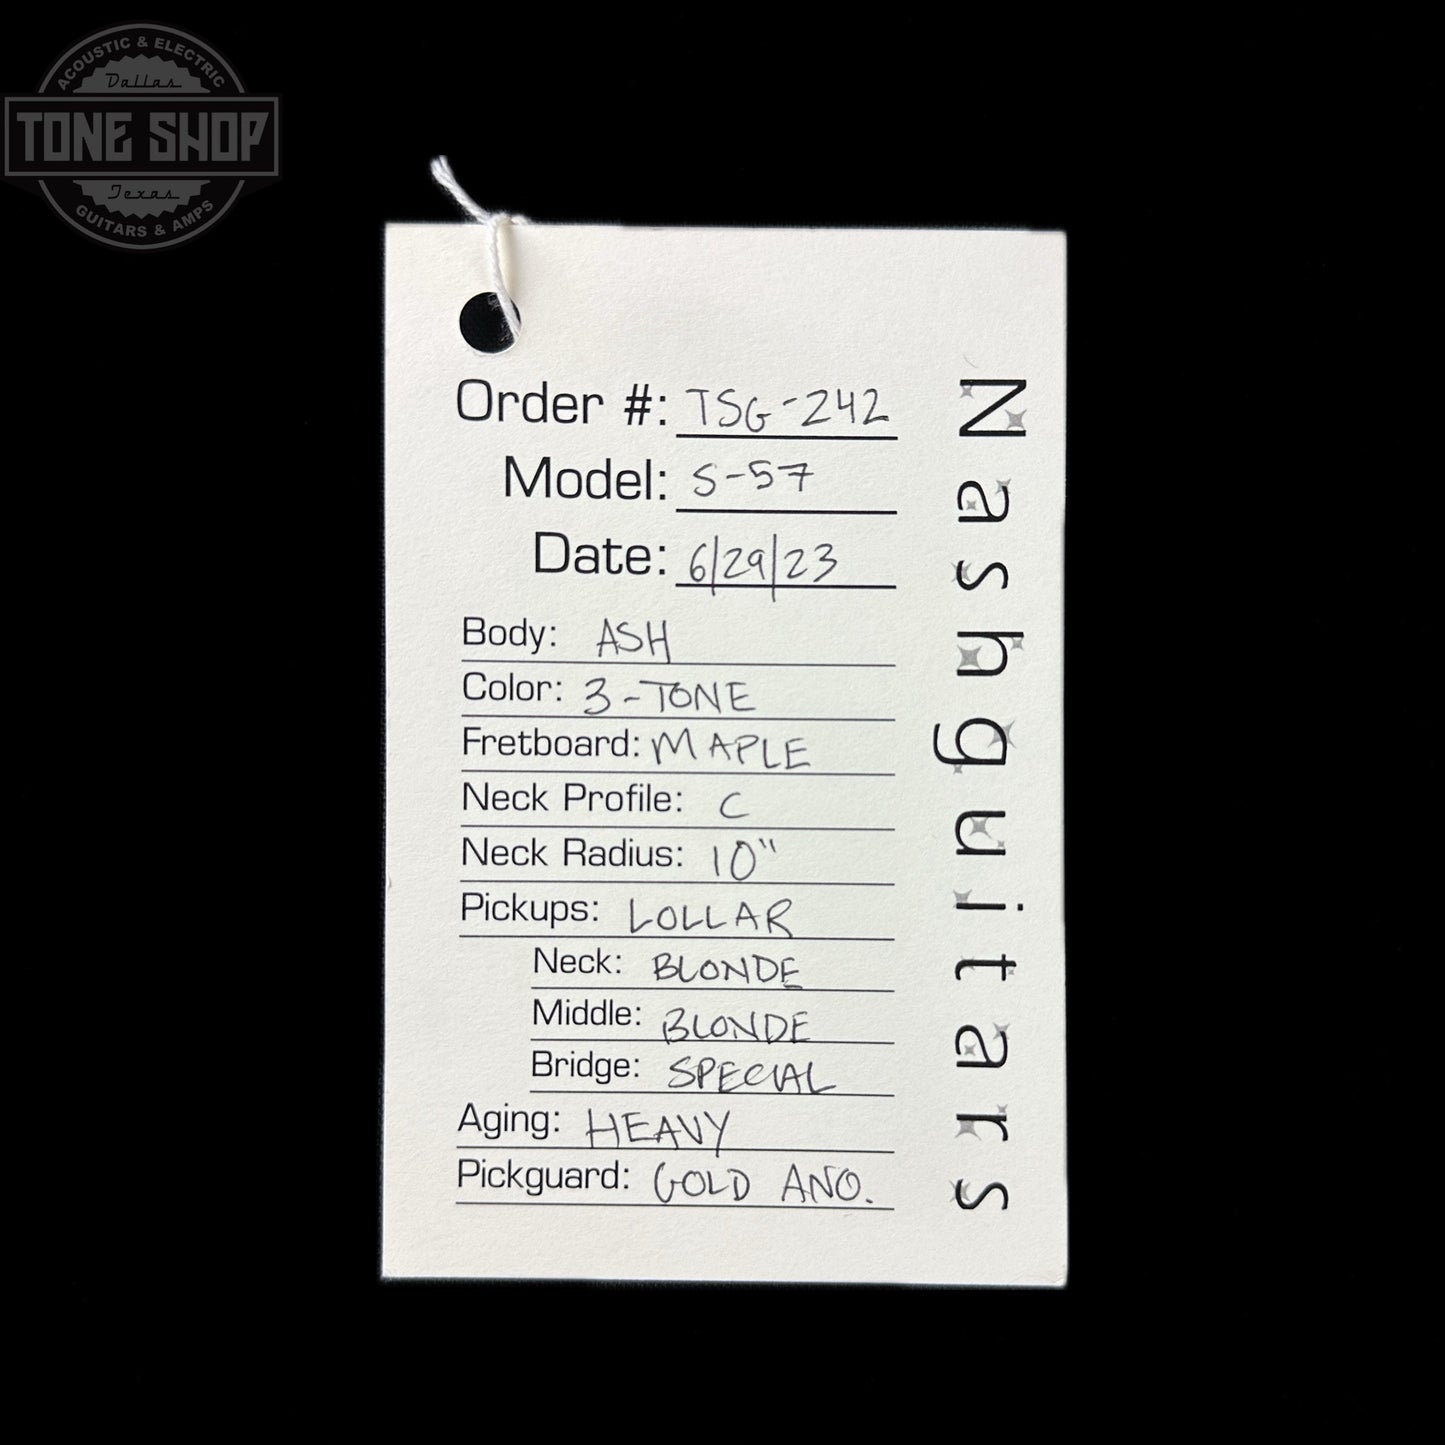 Spec sheet for Used Nash S-57 3 Tone Sunburst Heavy Aging.